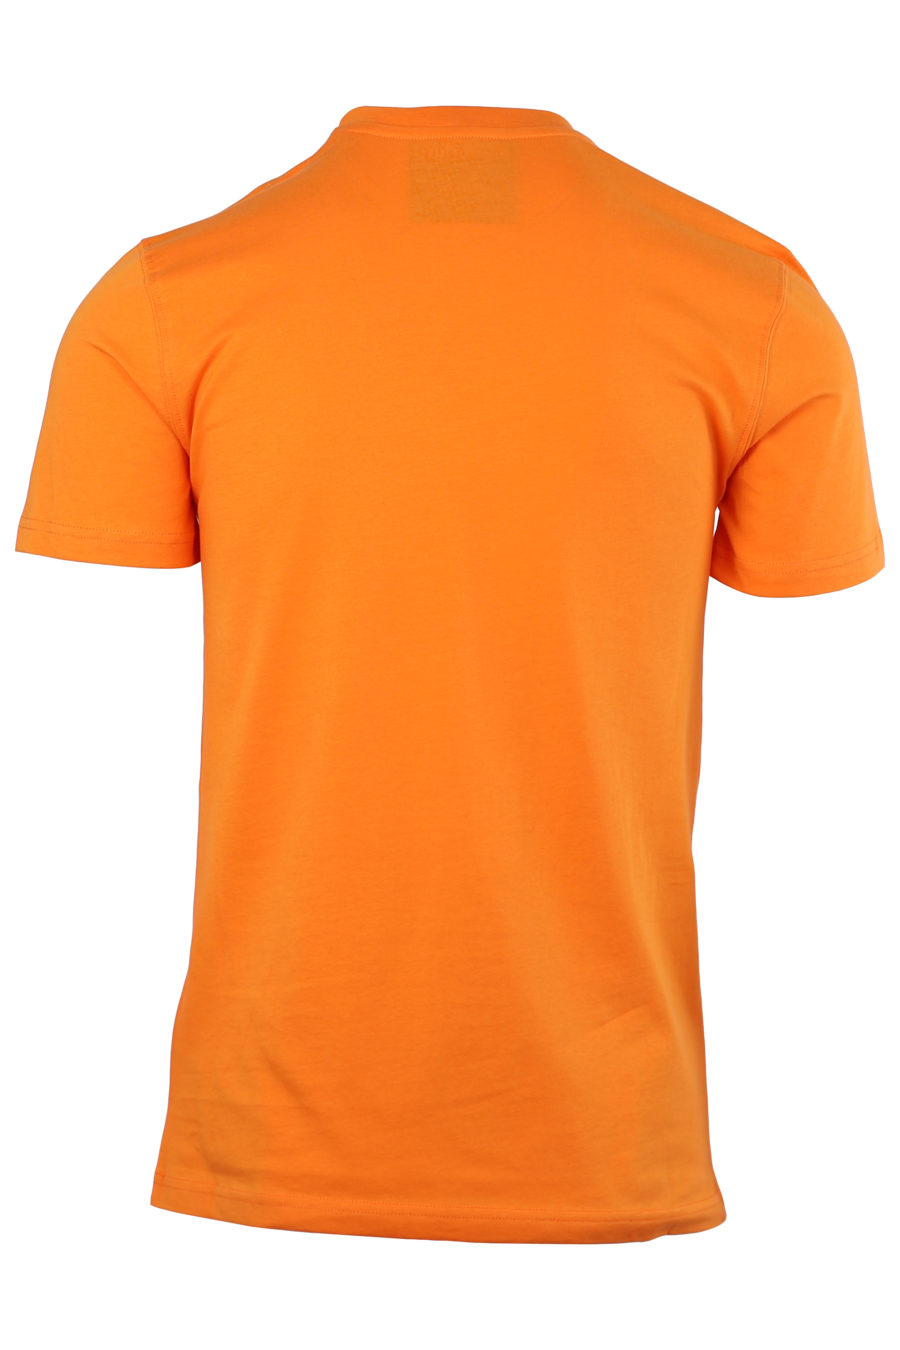 Camiseta naranja "Smiley" con logo bordado - IMG 9983